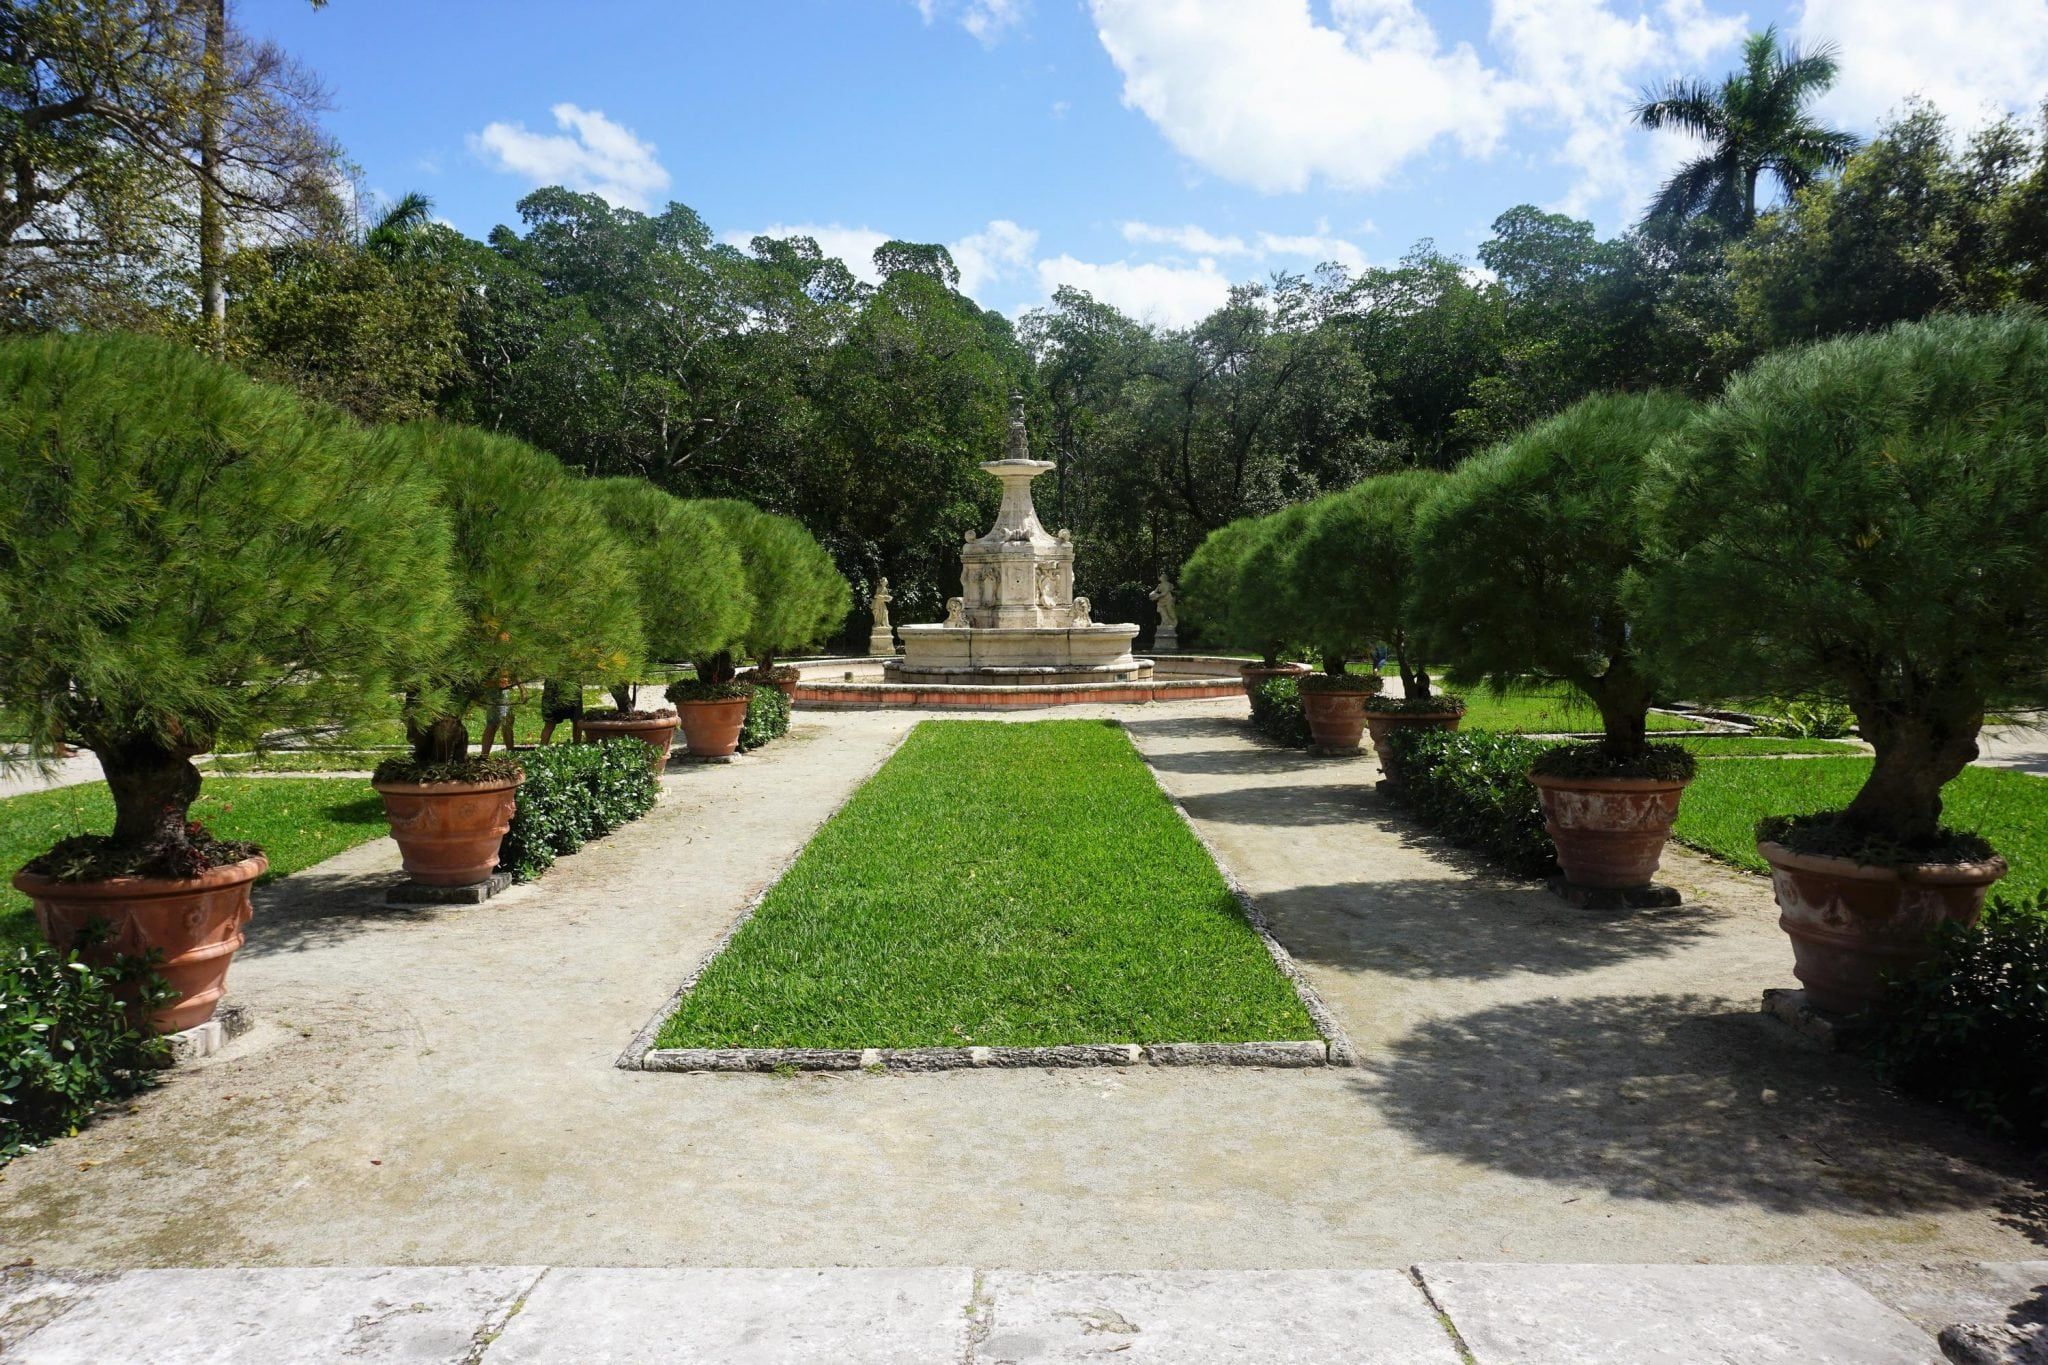 Secret Garden at Vizcaya